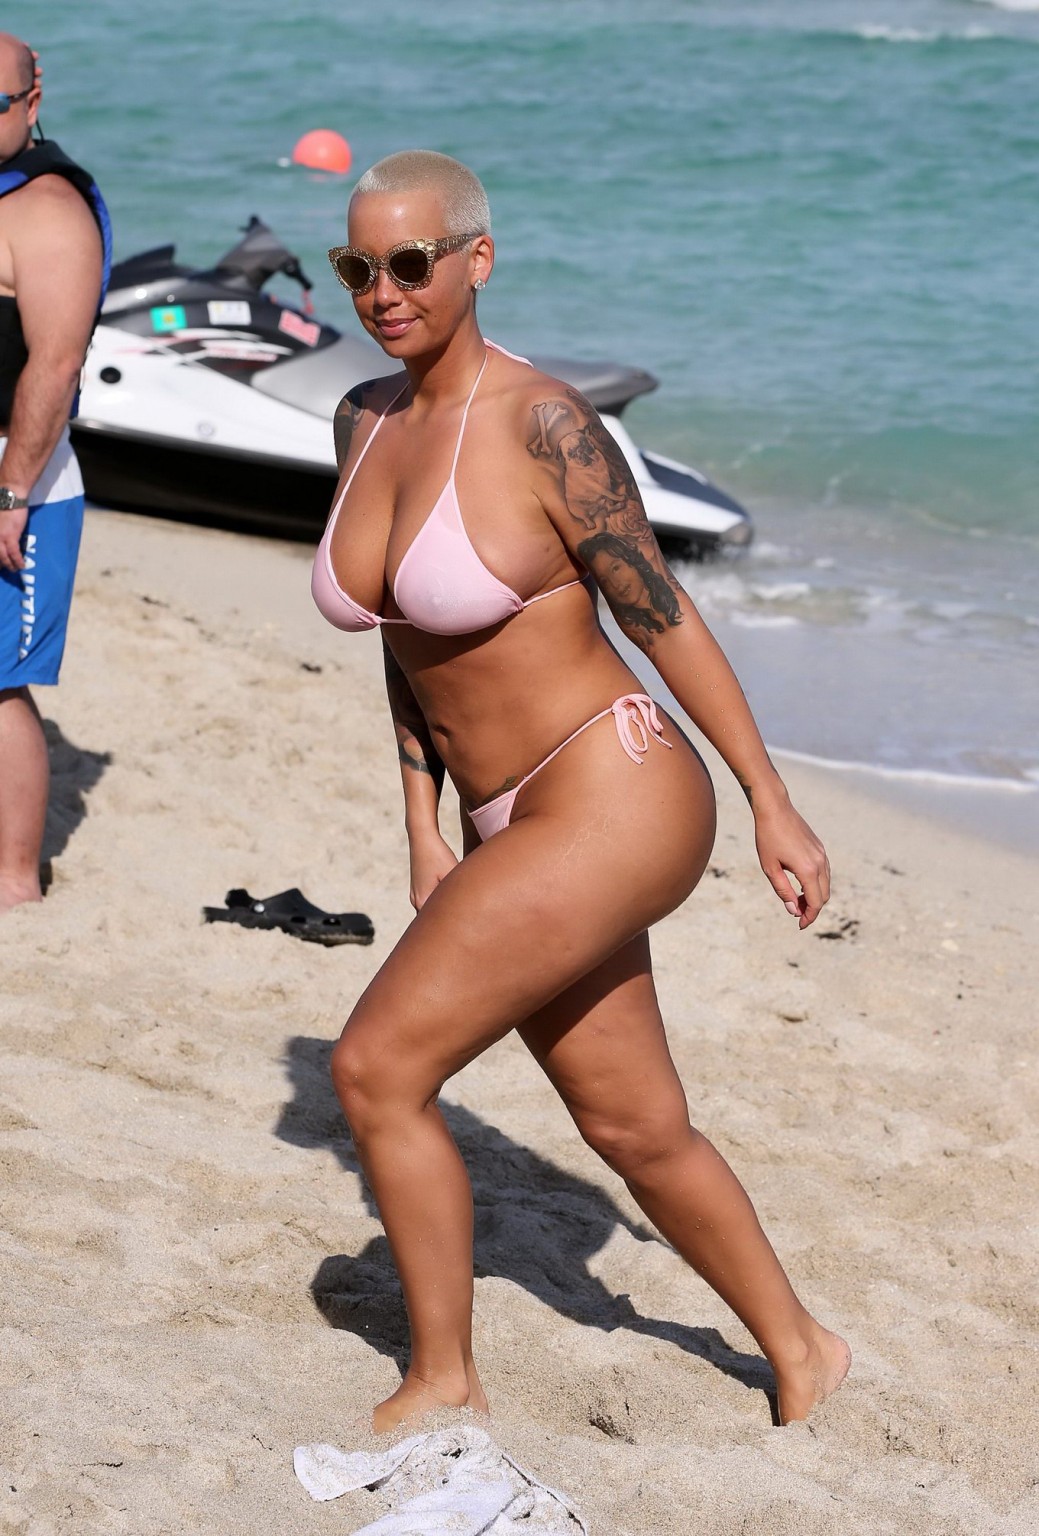 Amber rose con un bikini de tirantes en la playa de miami
 #75174917